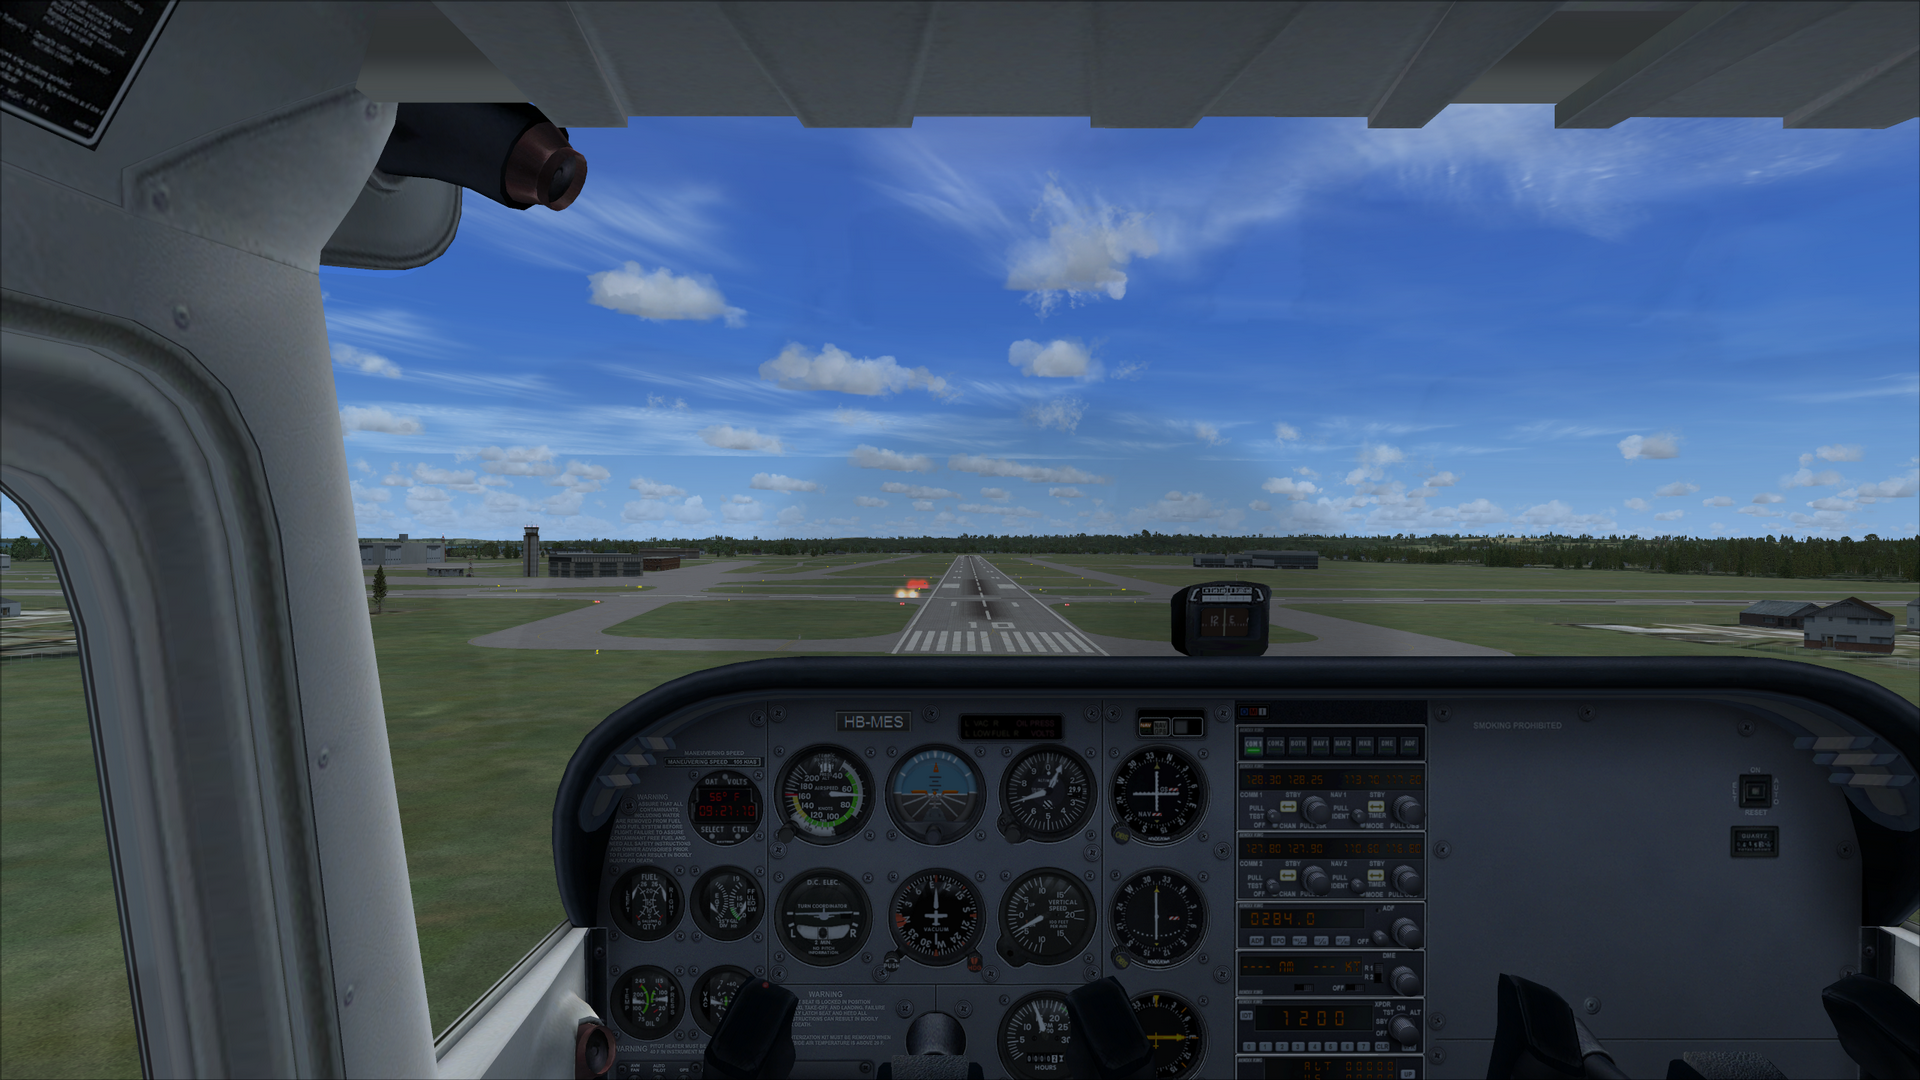 microsoft flight simulator x com